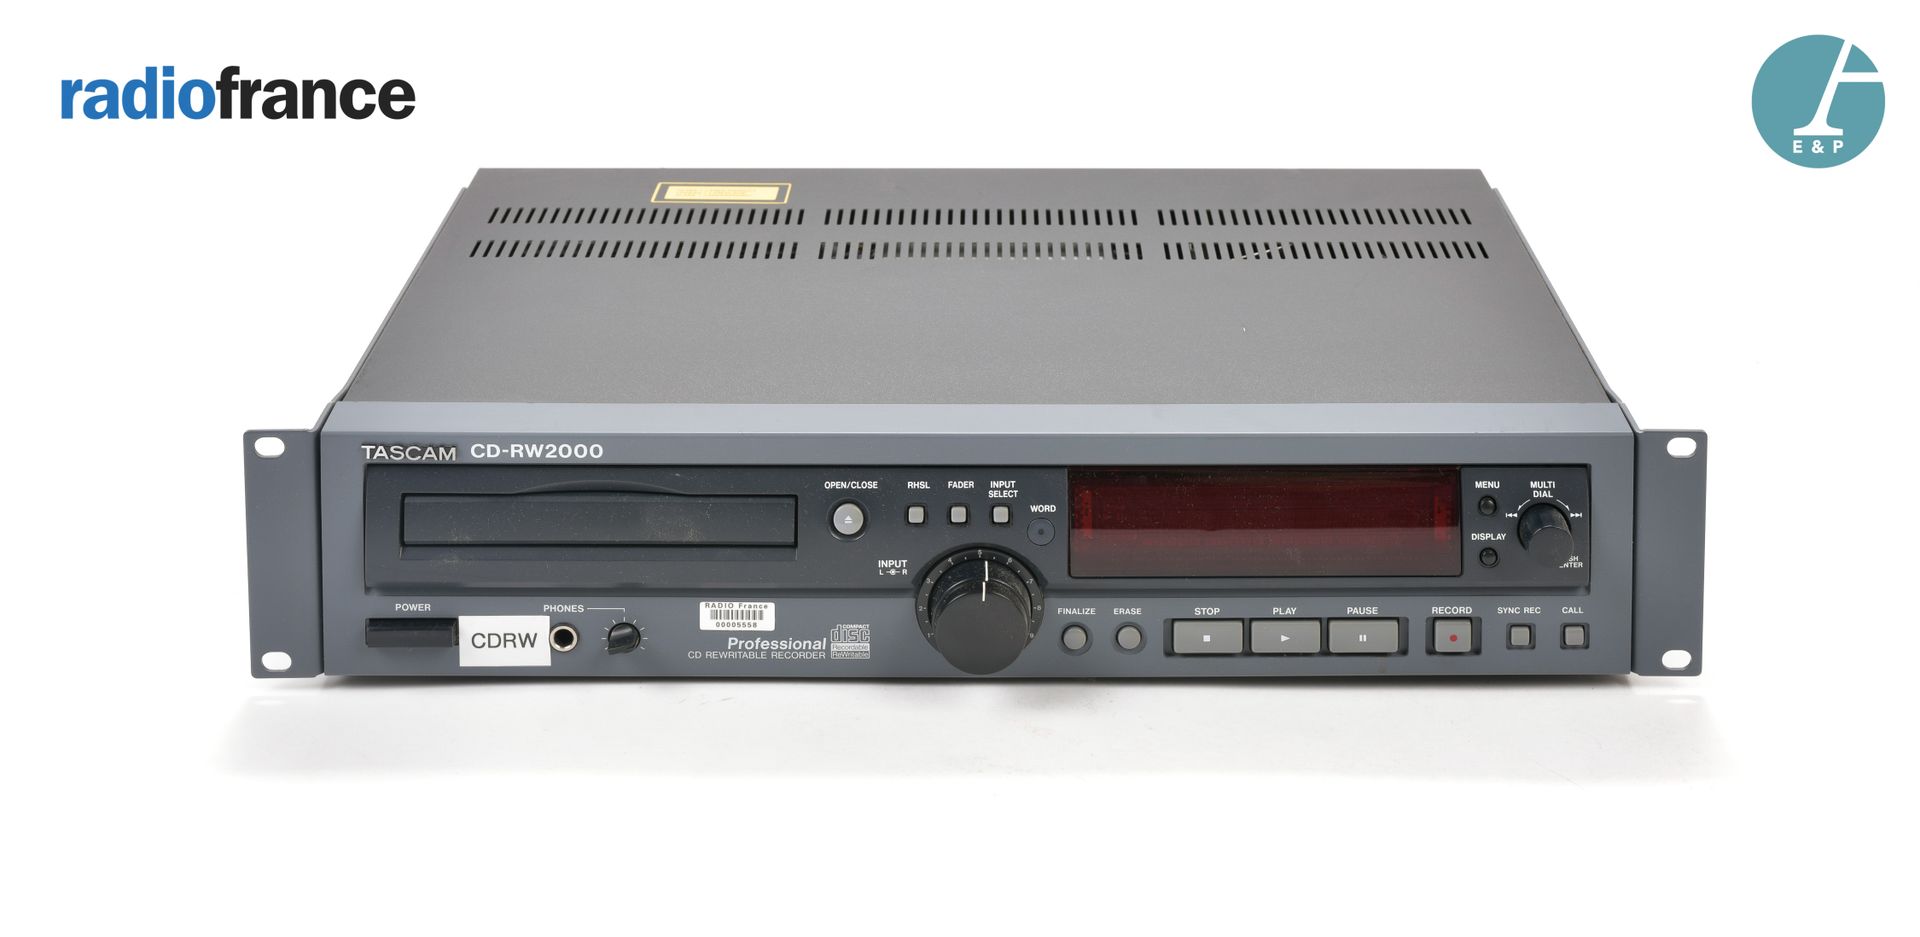 Null TASCAM，CD-RW2000读写器。

高：9厘米 - 宽：48.5厘米 - 深：32厘米

该设备处于使用状态，不保证其运行。